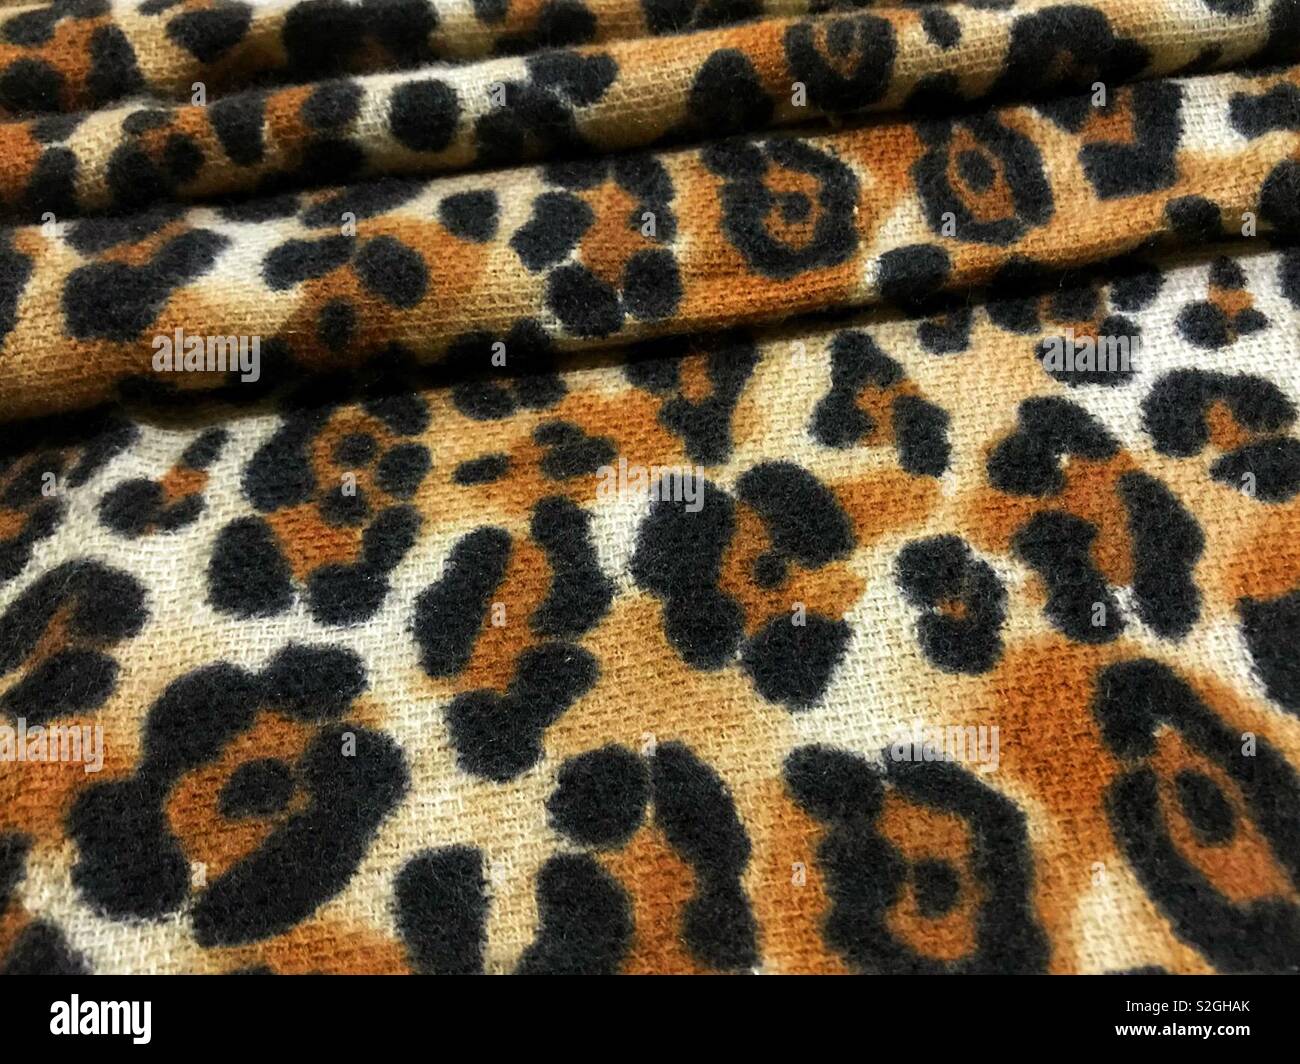 Leopard print material Stock Photo - Alamy